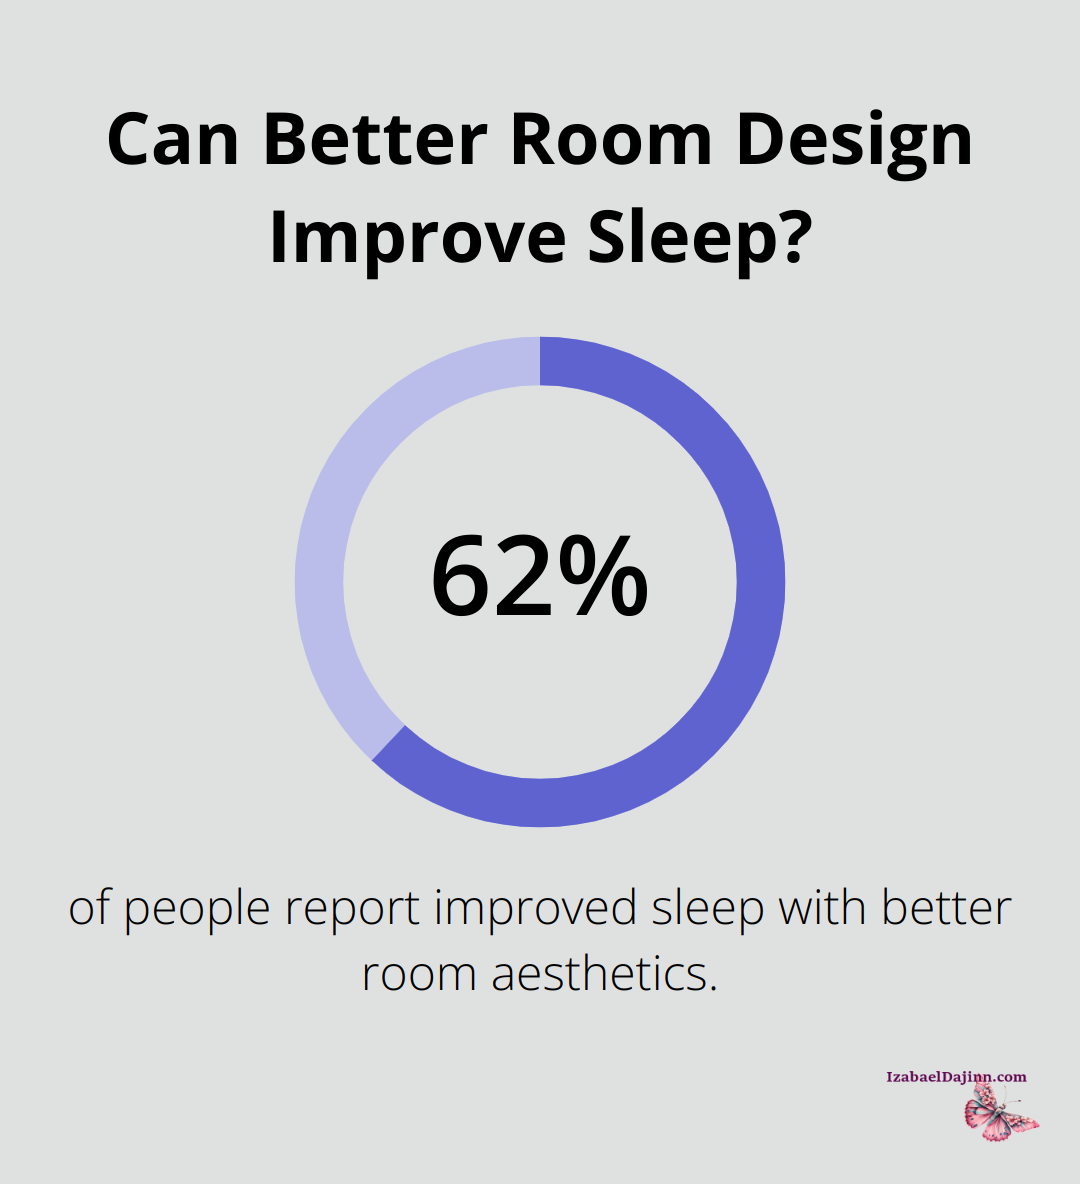 Can Better Room Design Improve Sleep?